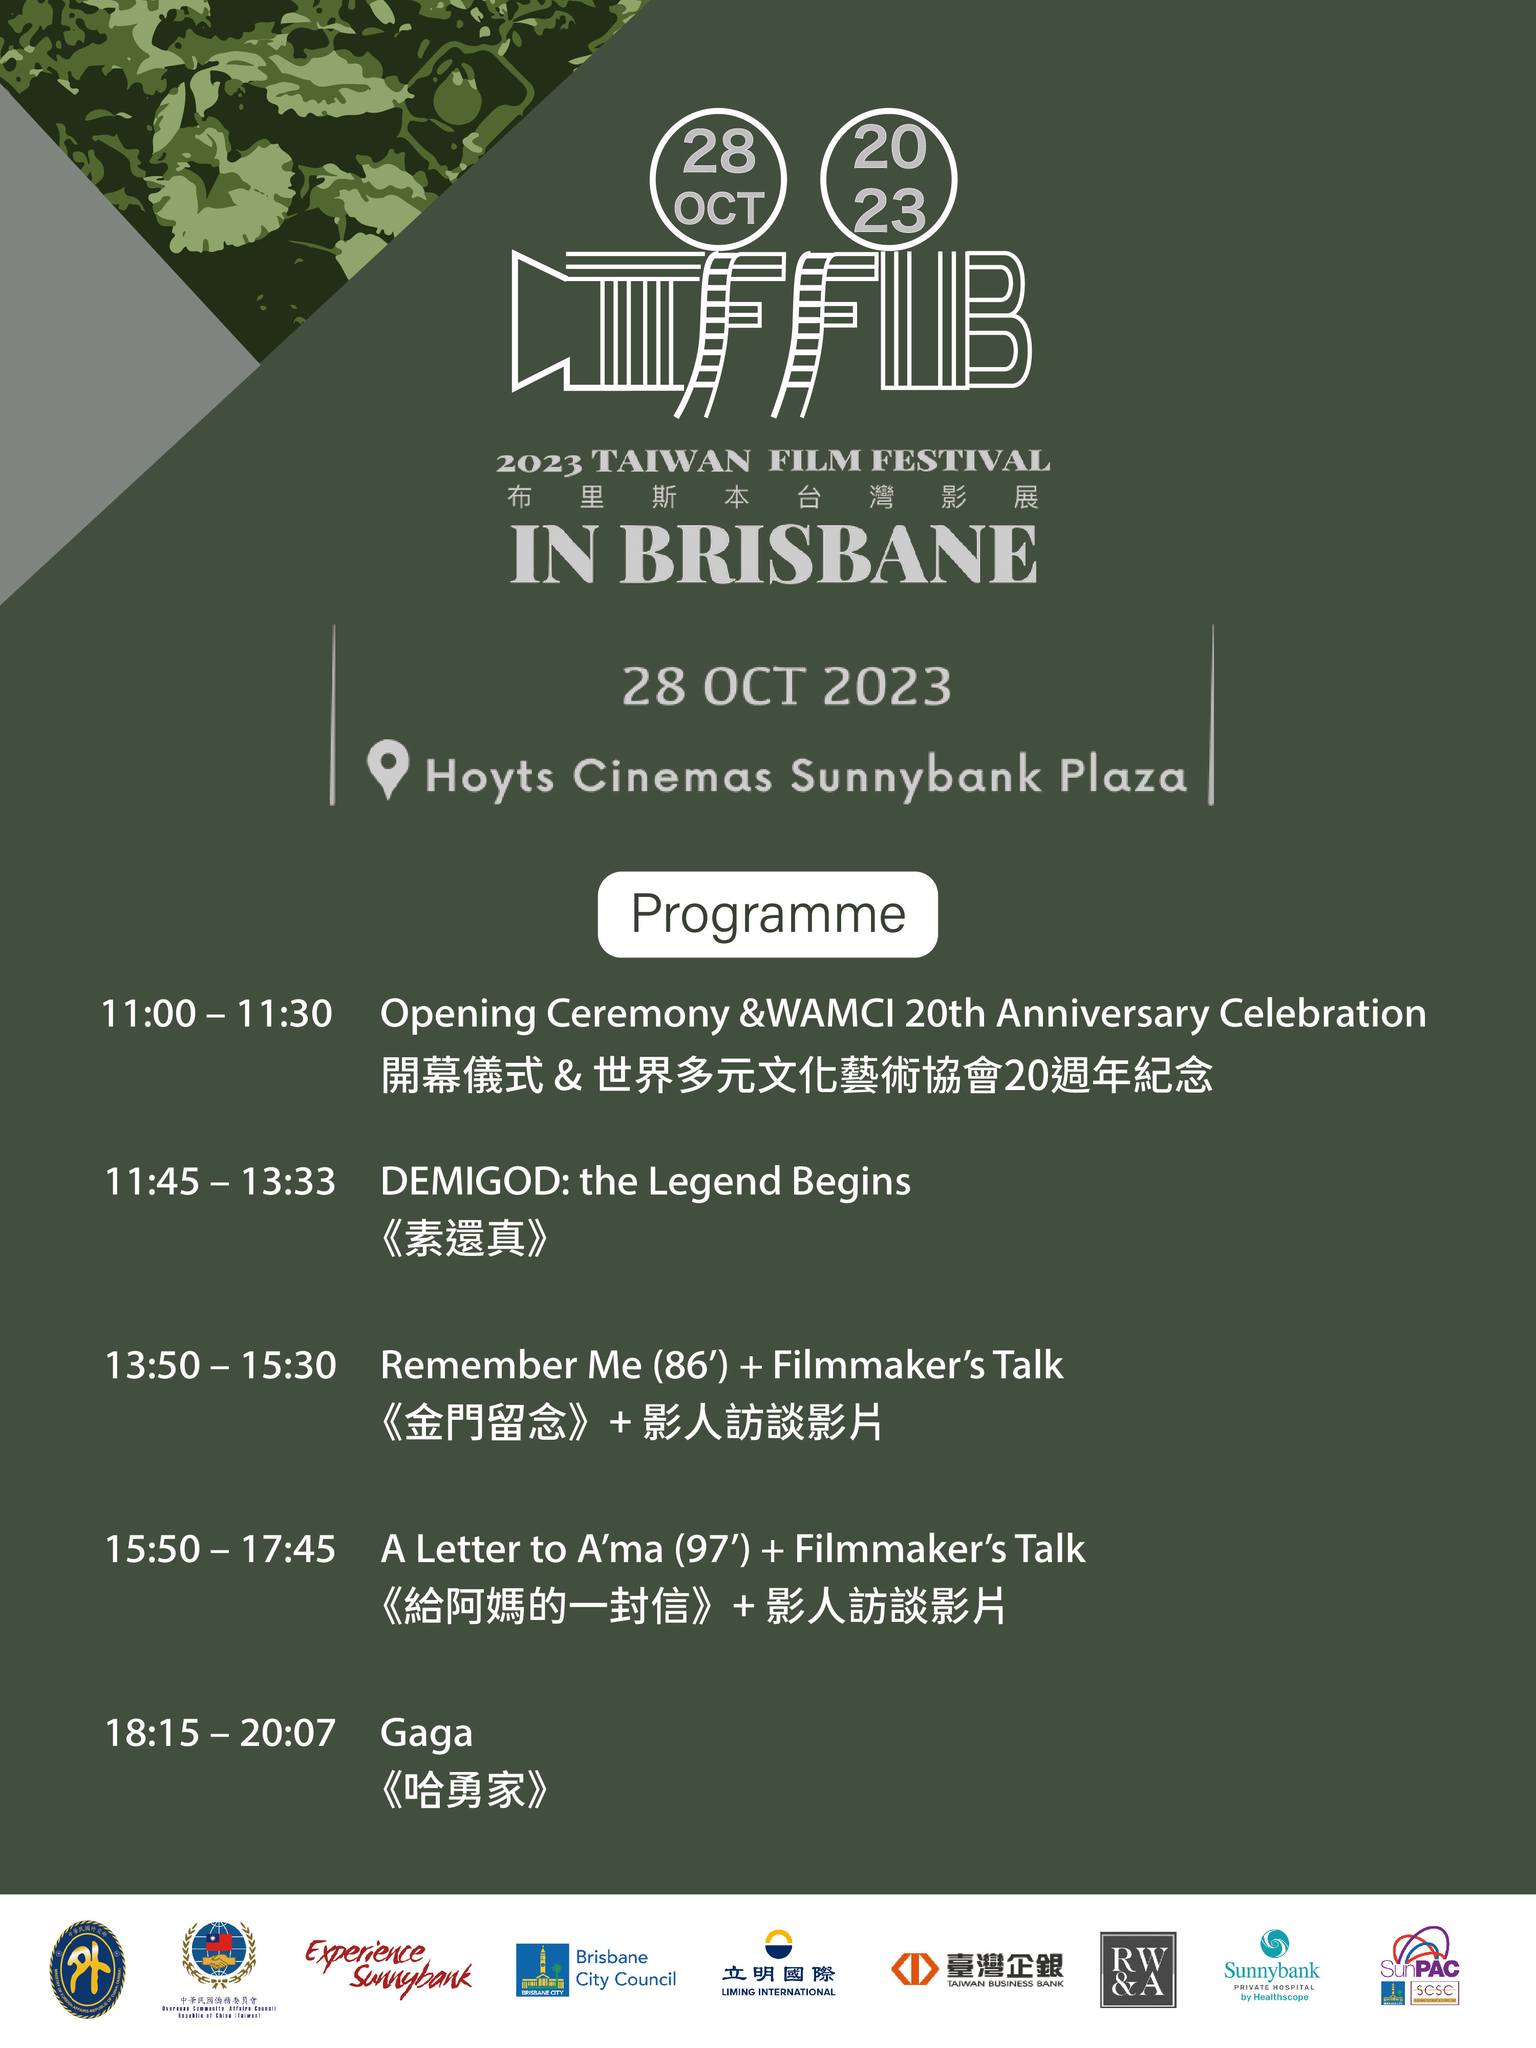 Taiwan Film Festival in Brisbane to take place 